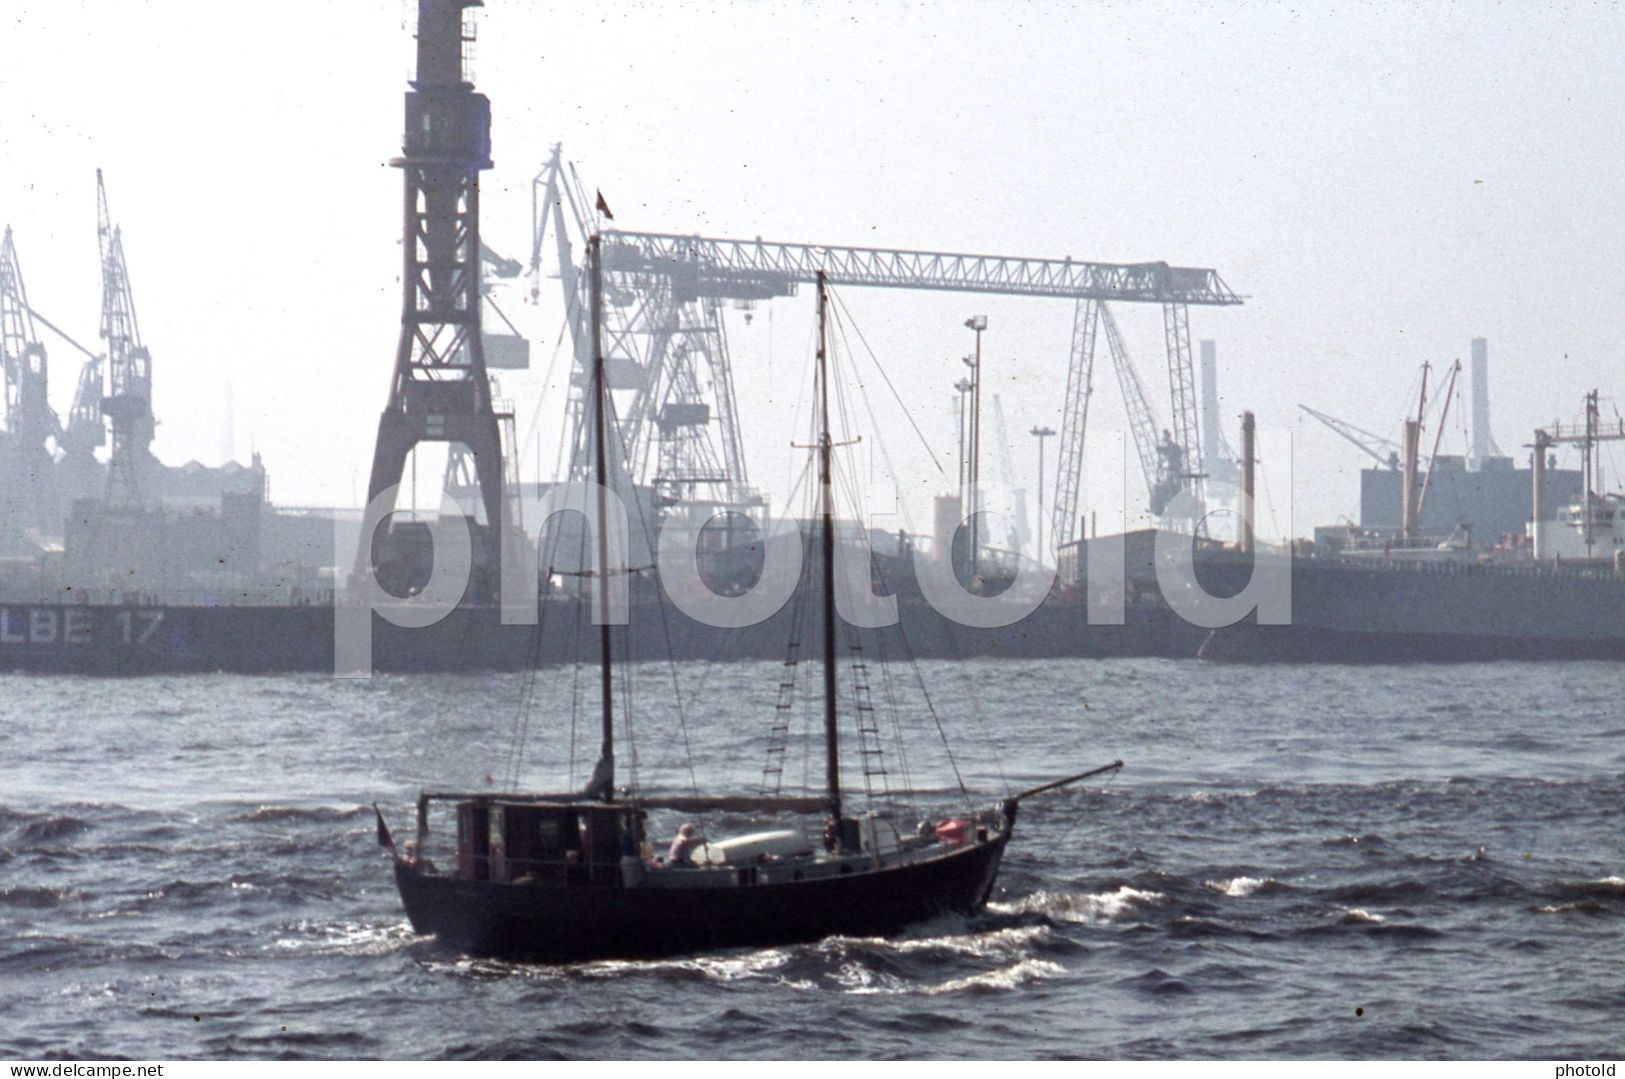 4 SLIDES SET 1970s SHIP VESSEL PORT HAMBURG GERMANY 35mm ORIGINAL AMATEUR DIAPOSITIVE SLIDE Not PHOTO No FOTO NB4108 - Diapositives (slides)